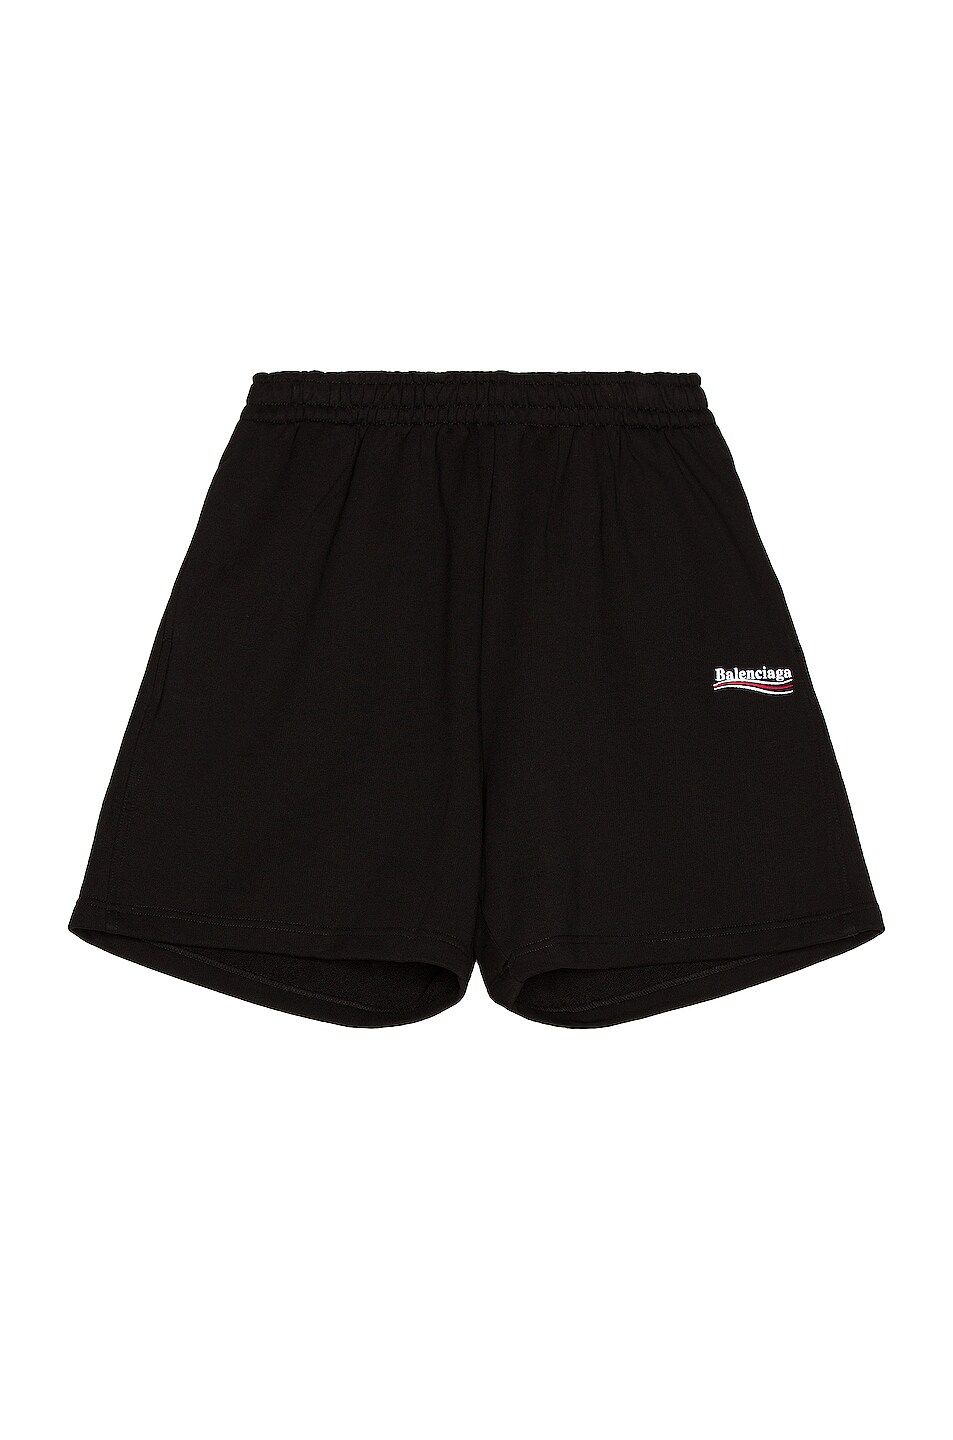 Balenciaga Sweat Shorts in Black | FWRD